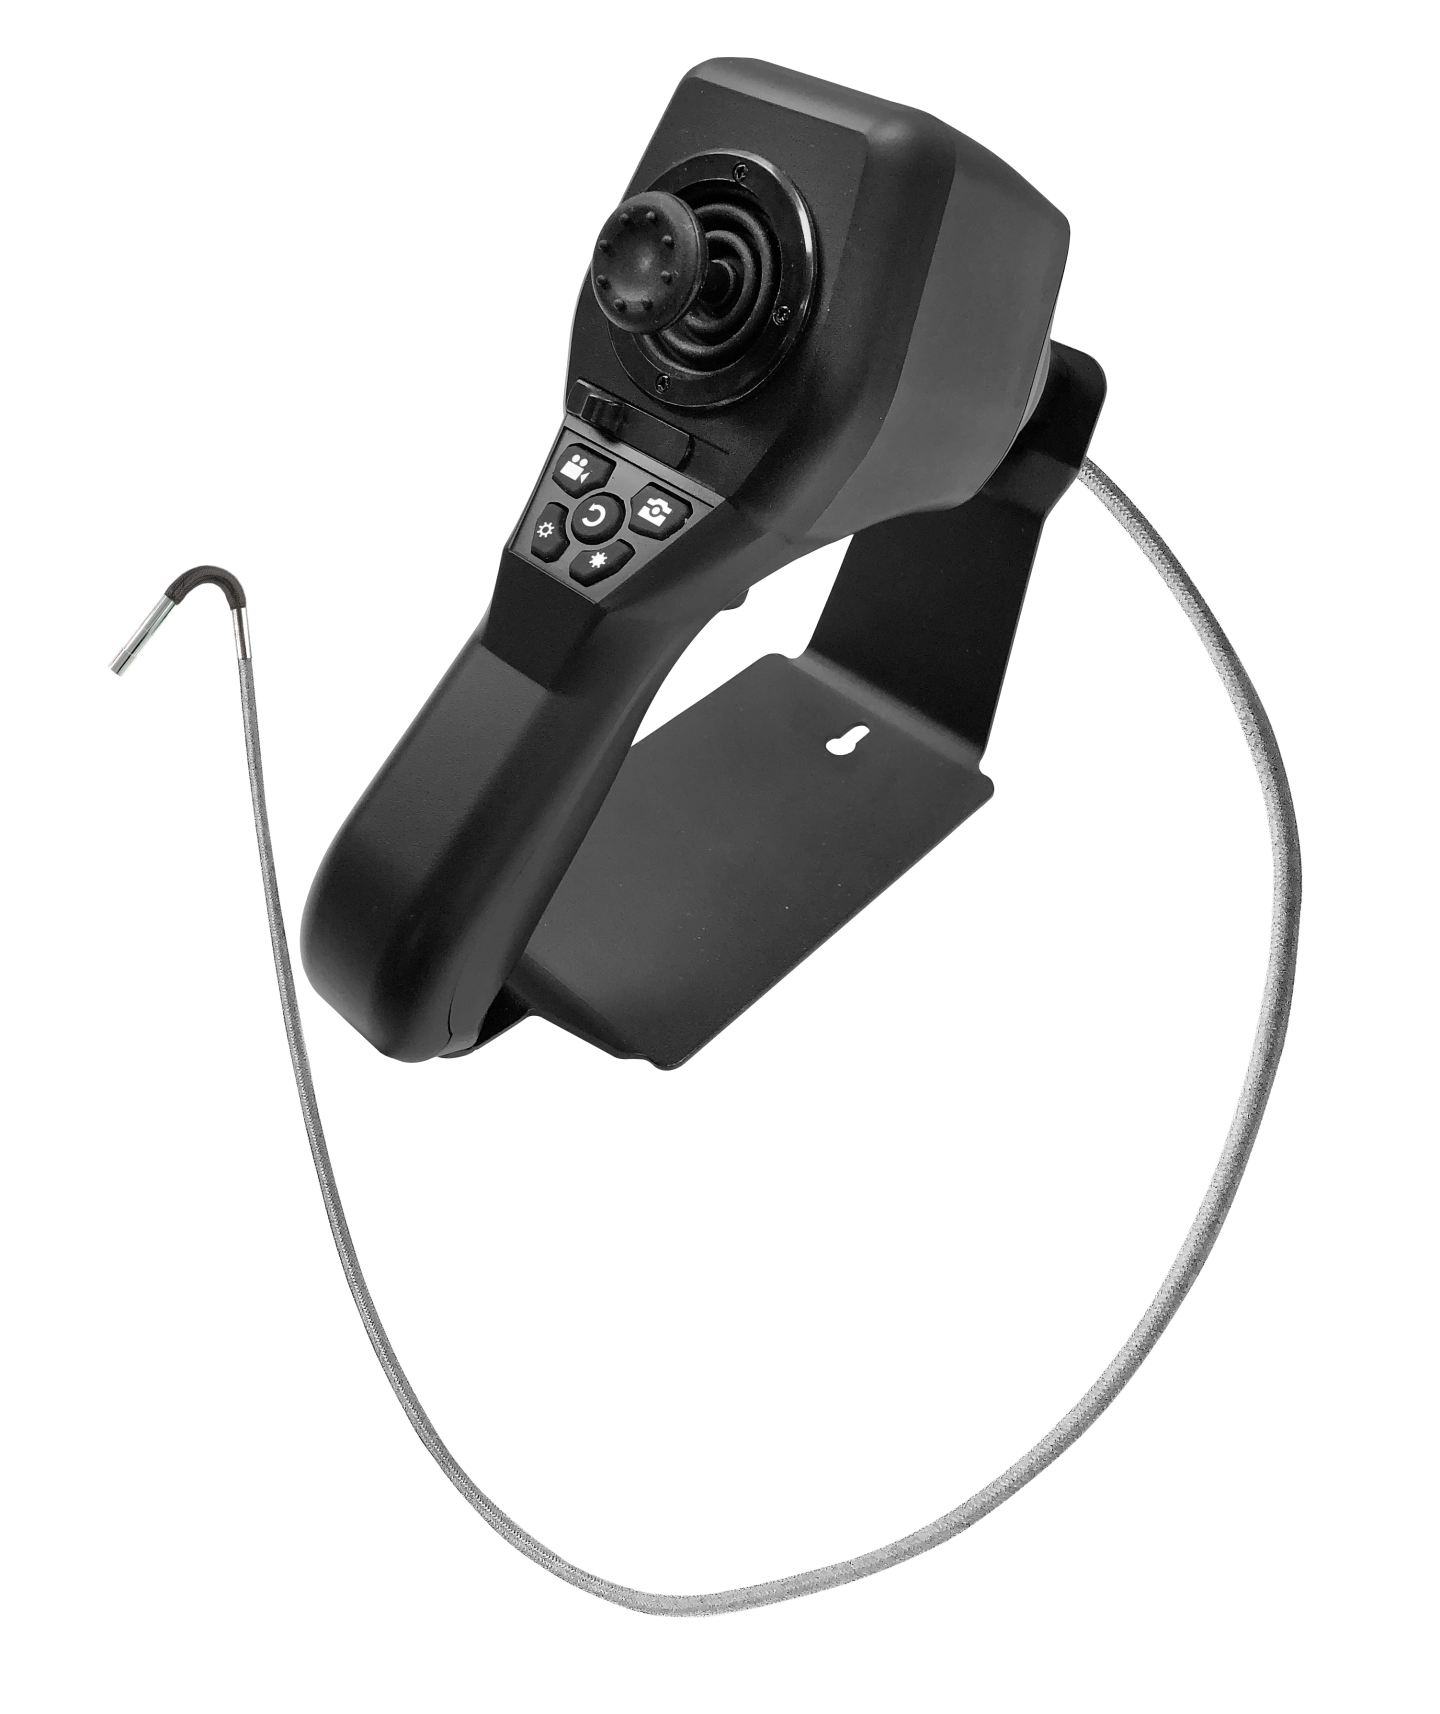 Industrial-video-endoscope-ph7-series-7-wolfram-probe-360